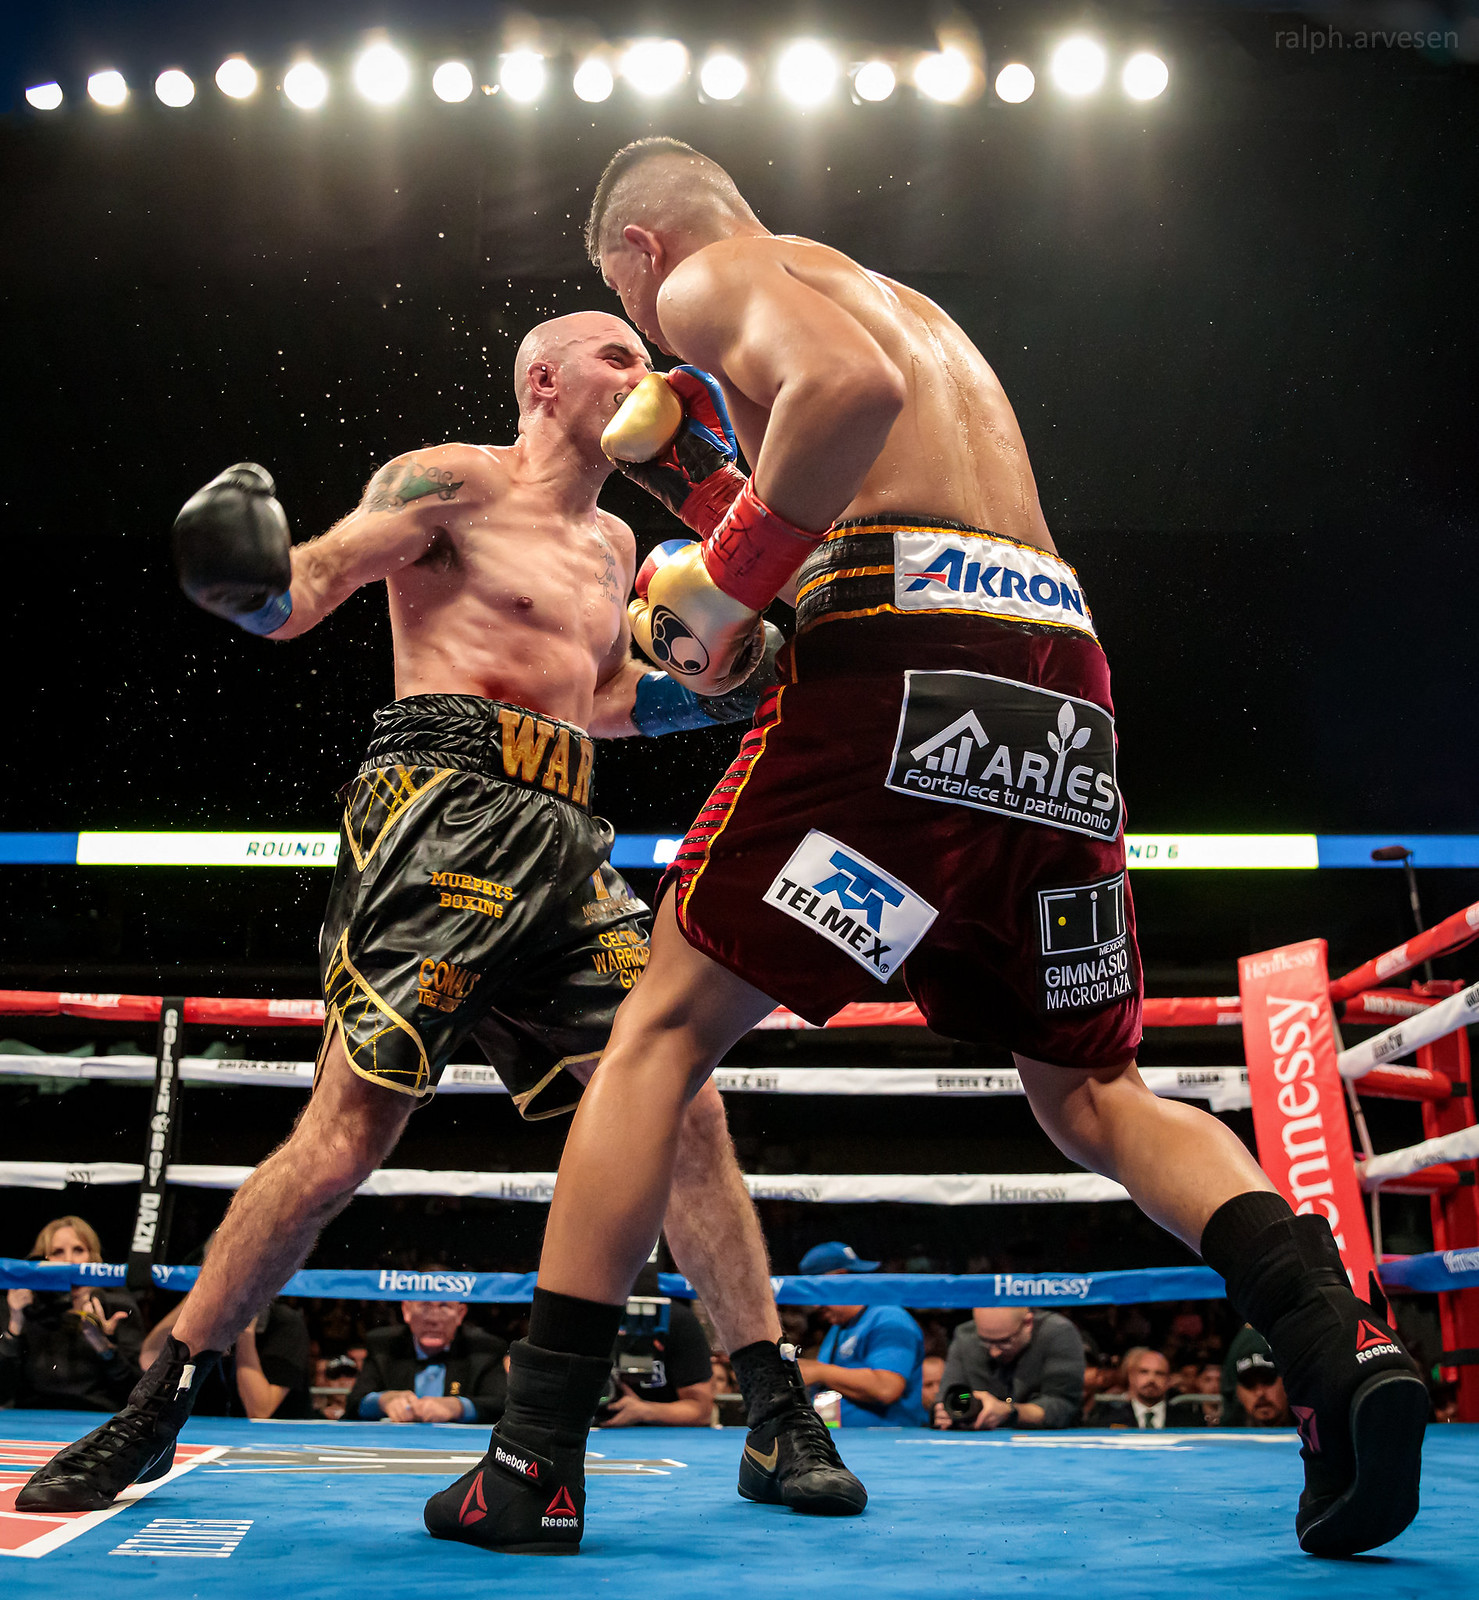 Boxing | Texas Review | Ralph Arvesen